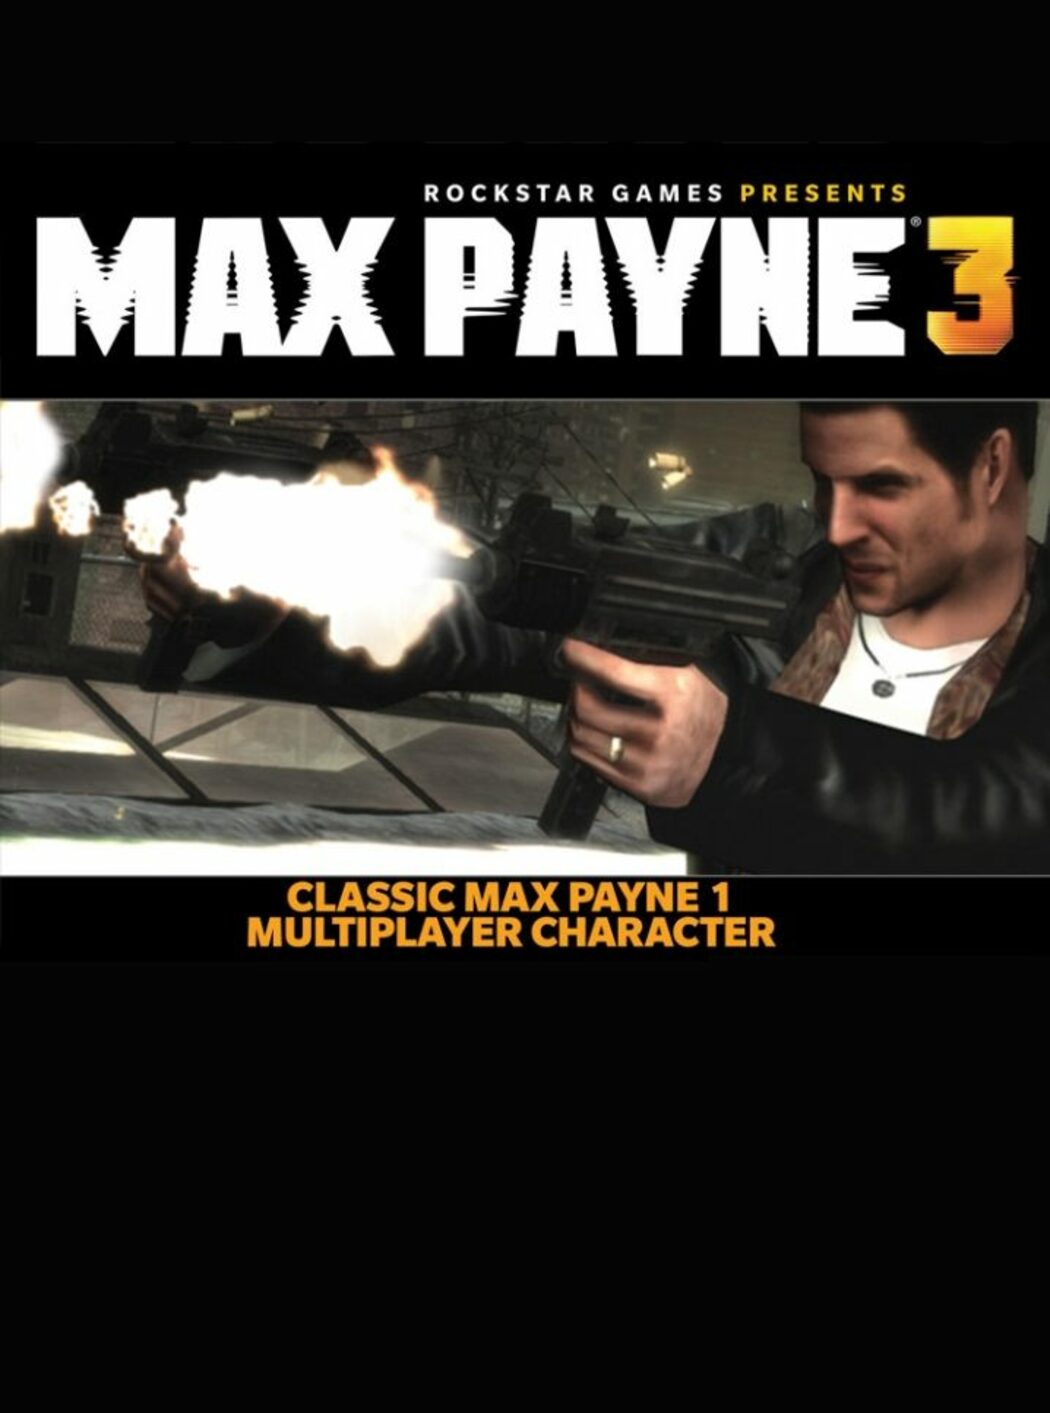 max payne 3 classic max